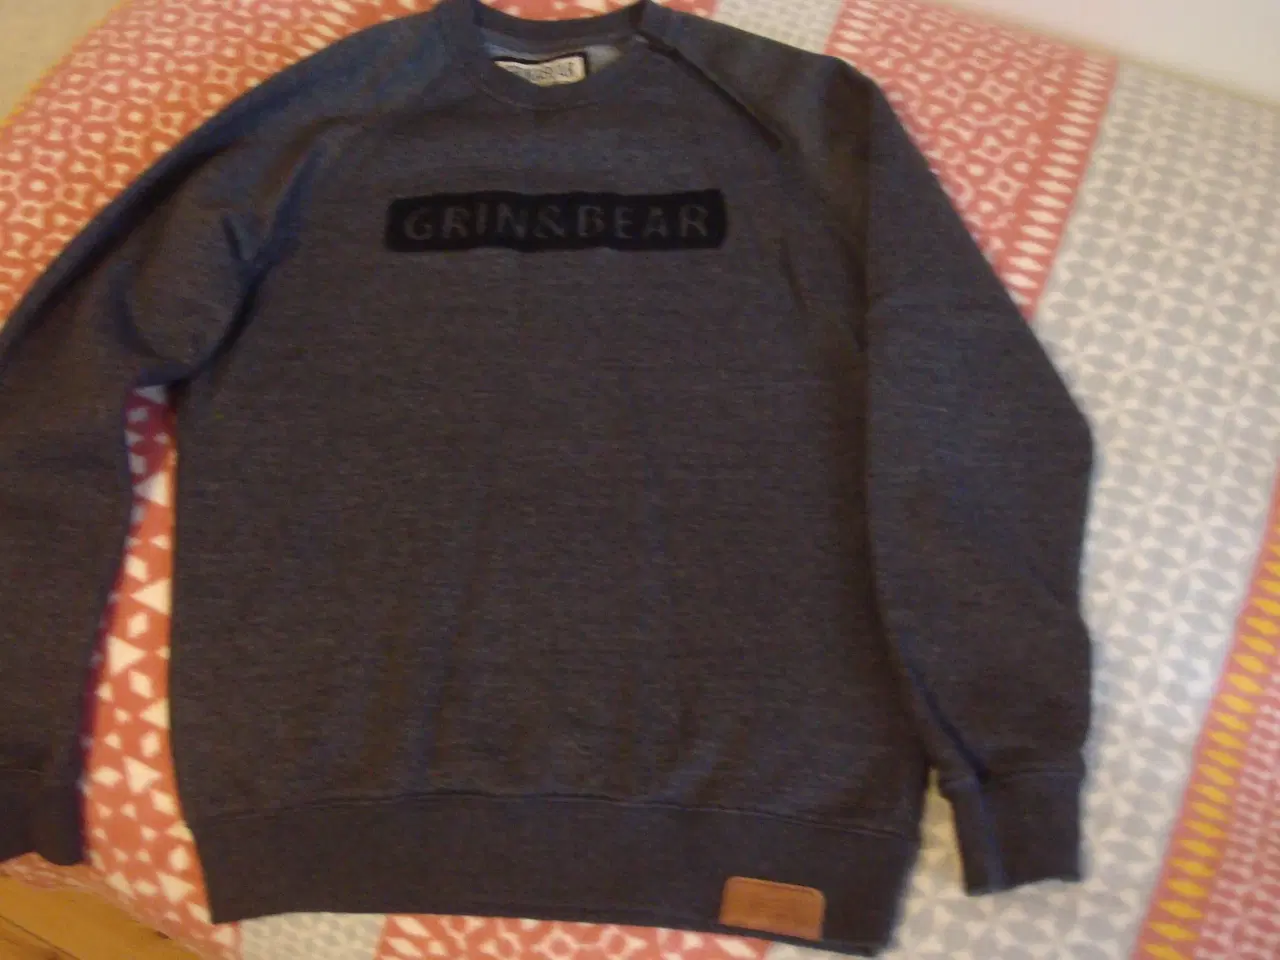 Billede 1 - GRIN&BEAR sweater